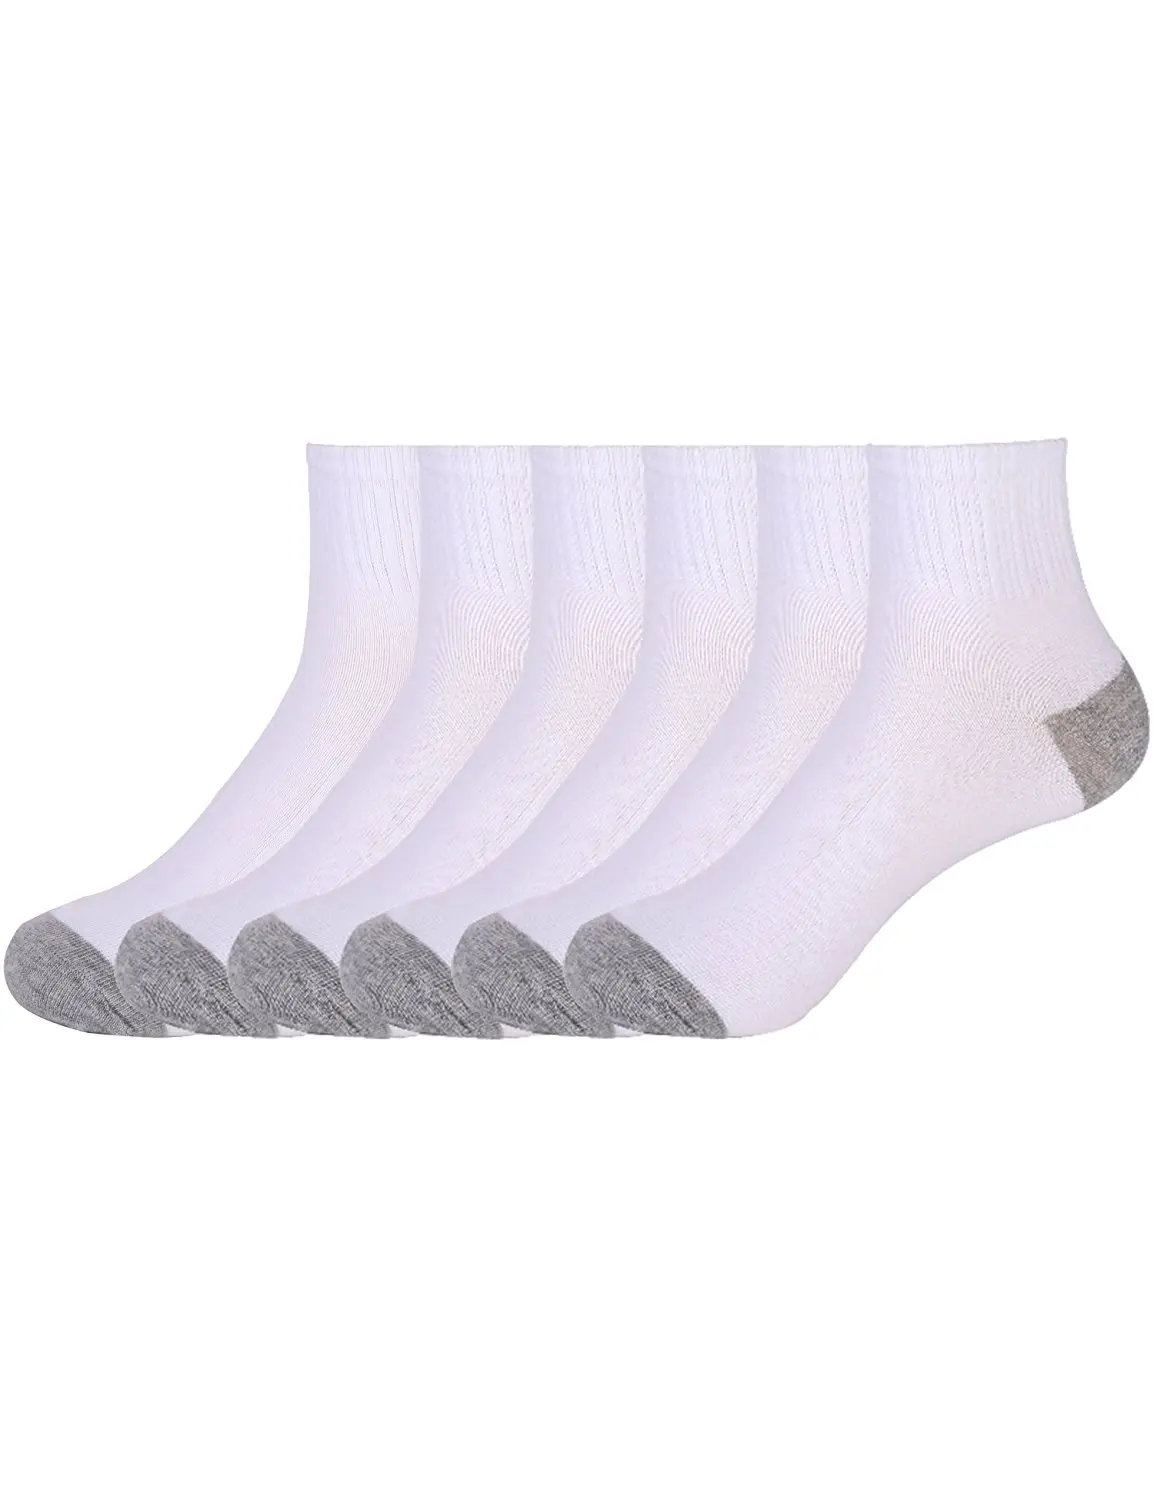 Buy Mens Ankle Socks White Athletic Quarter Crew Cotton Sock 6 Pack Low ...